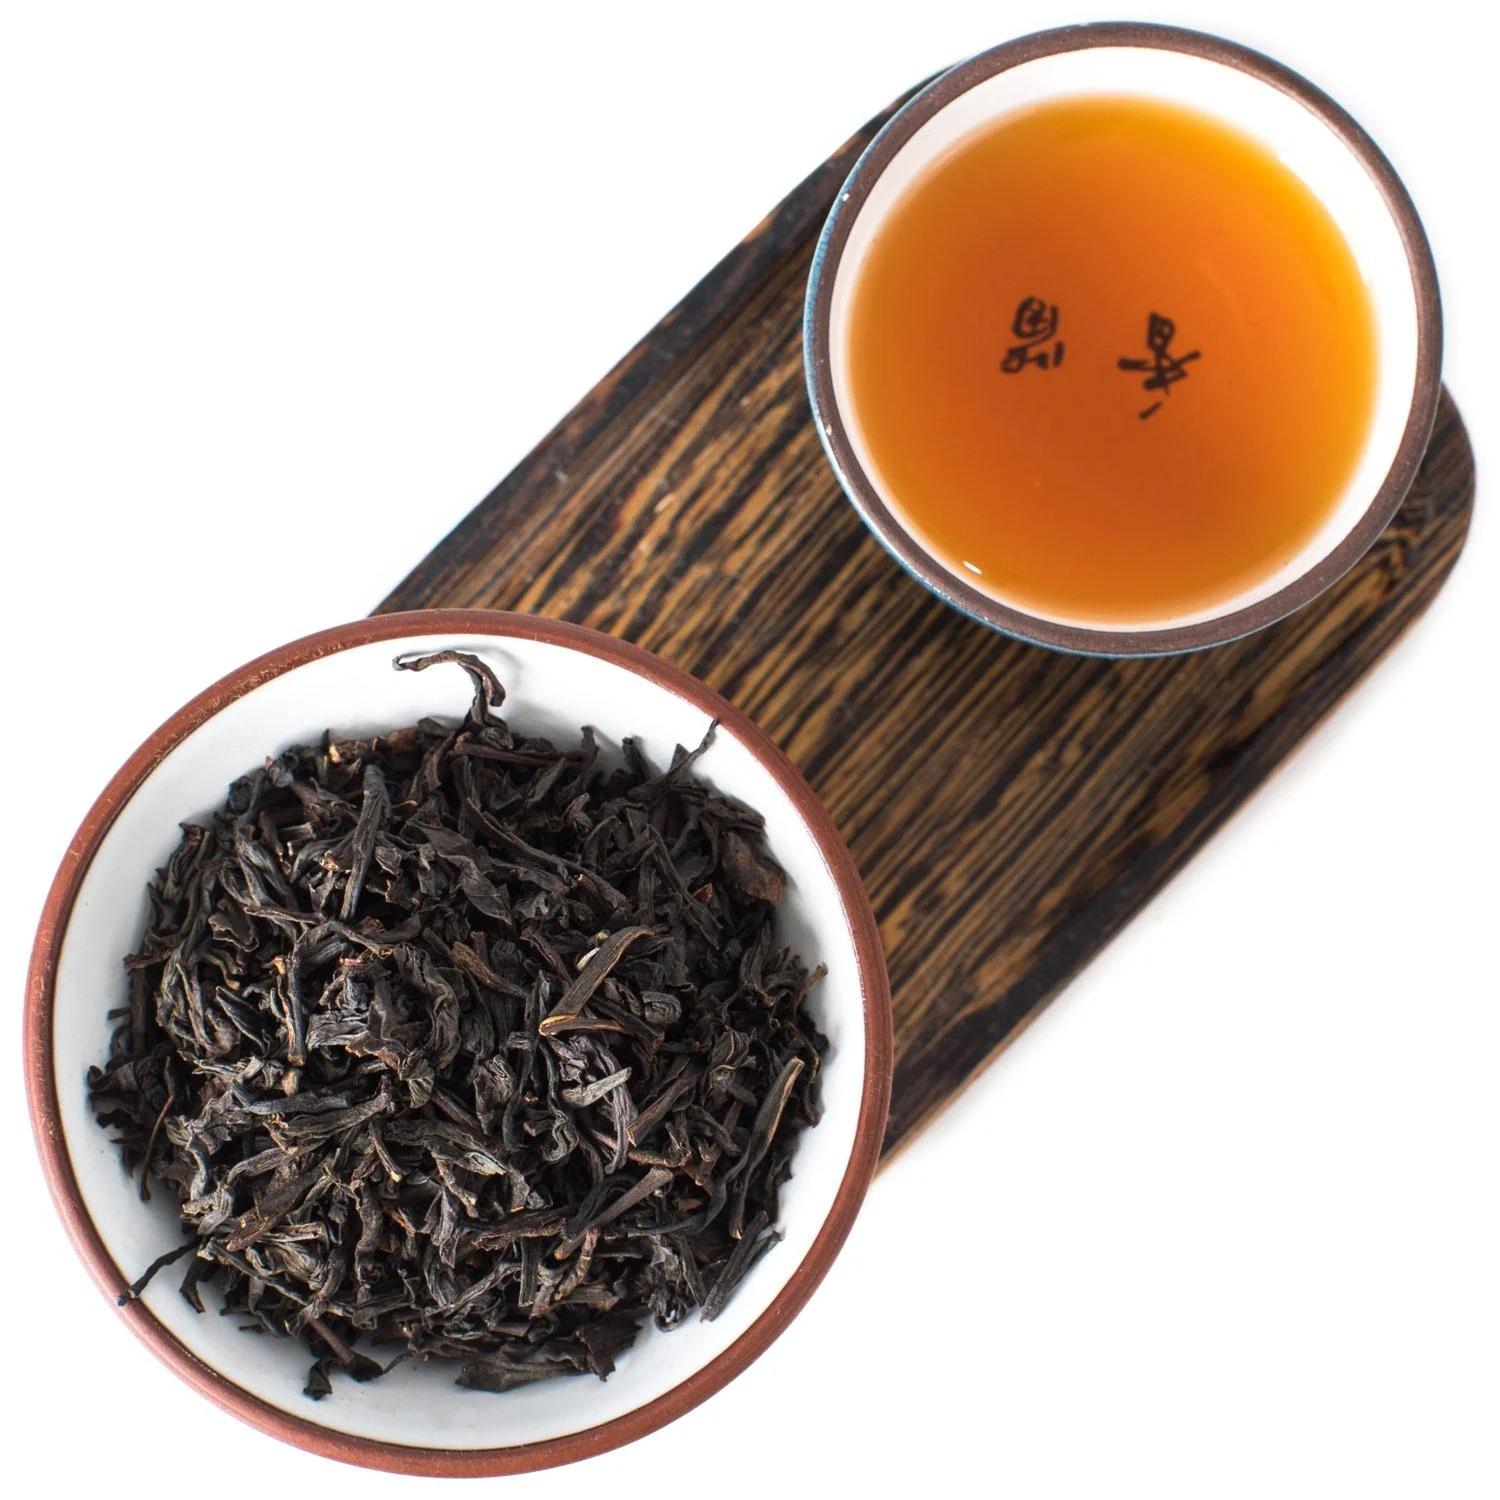 smoked lychee tea - How is lychee black tea made